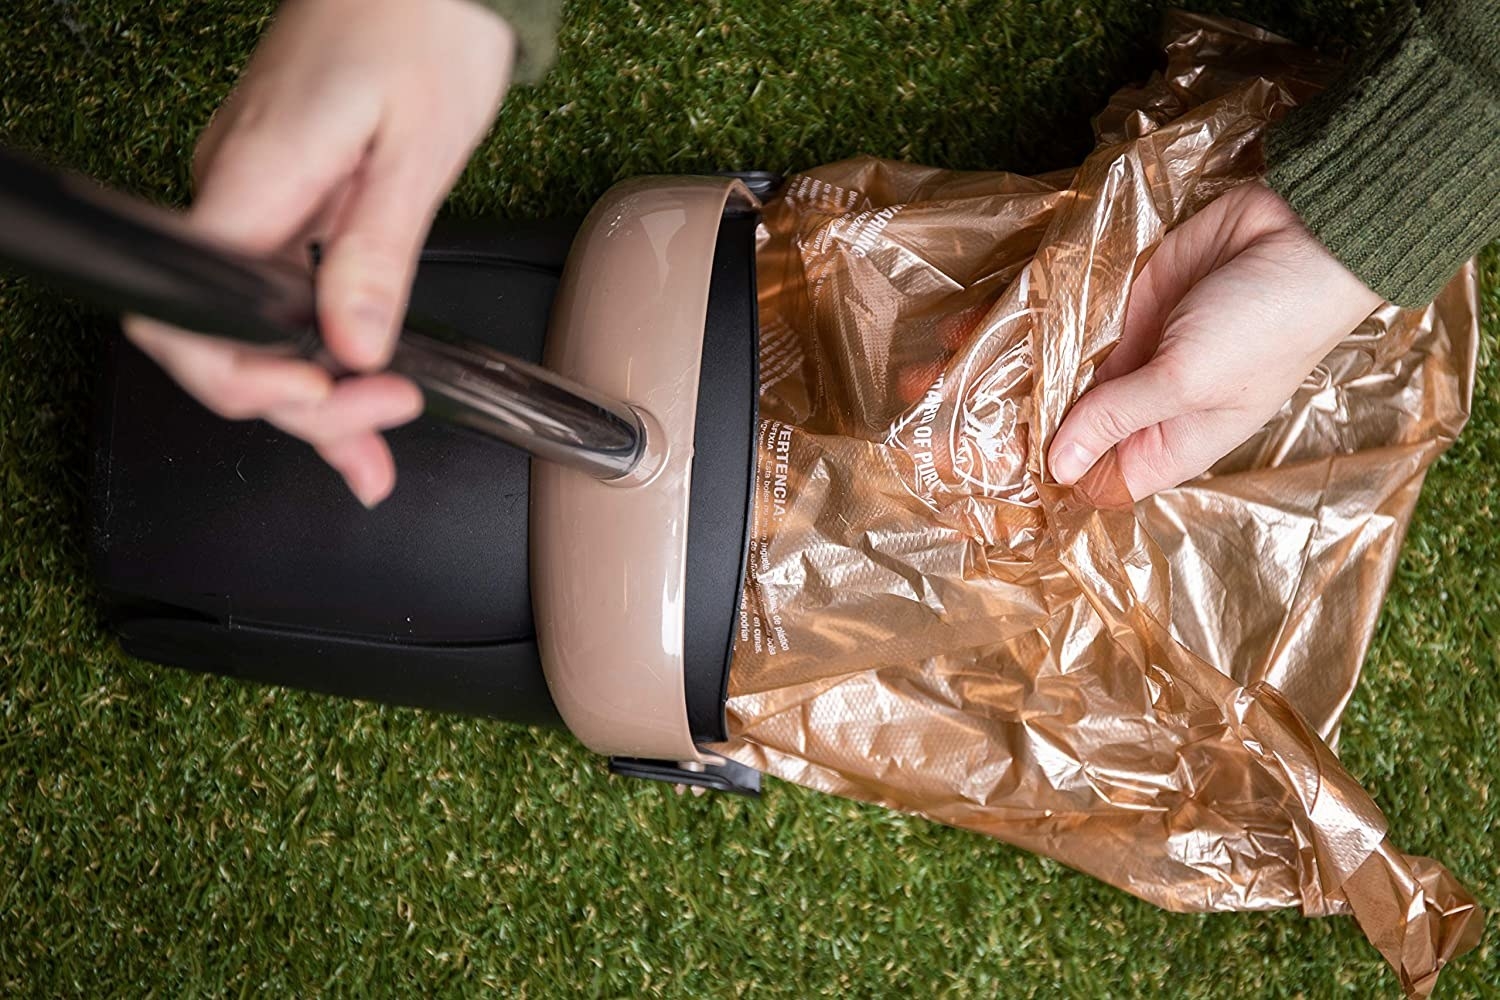 A model tucking a liner bag into the swivel bin